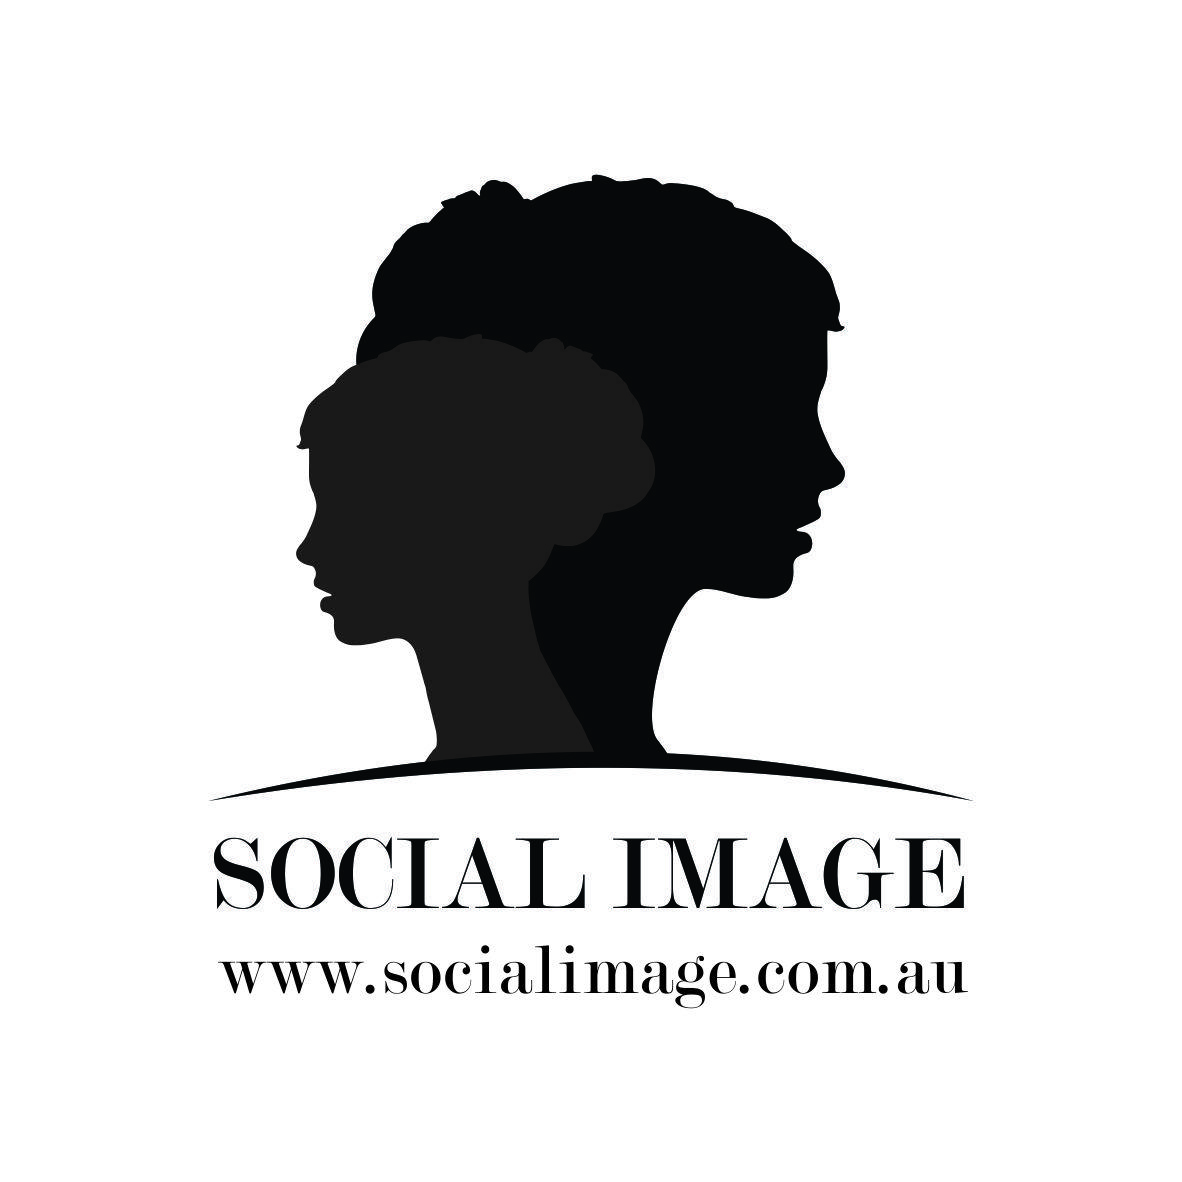 Dang Logo - Dating Logo Design for Social Image by dang | Design #4237119